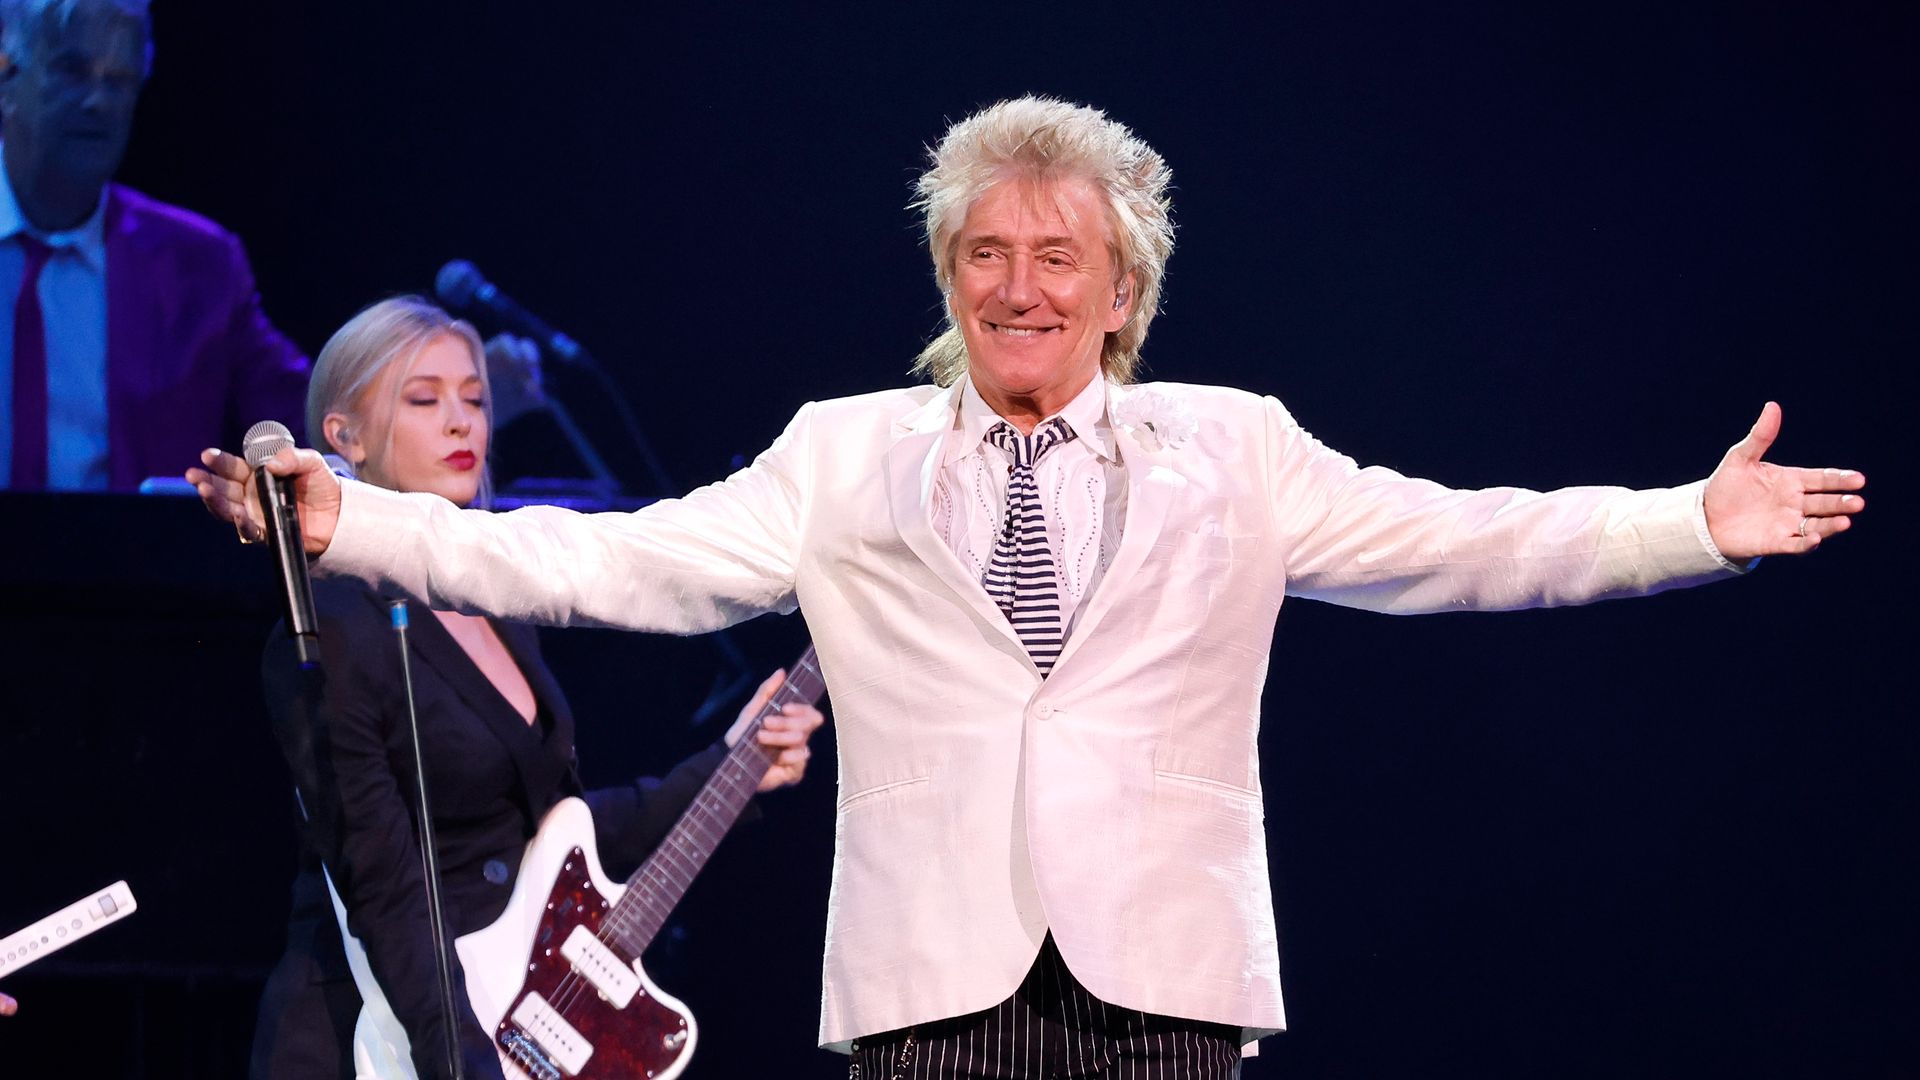 Rod Stewart performs at Bridgestone Arena on July 05, 2022 in Nashville, Tennessee.